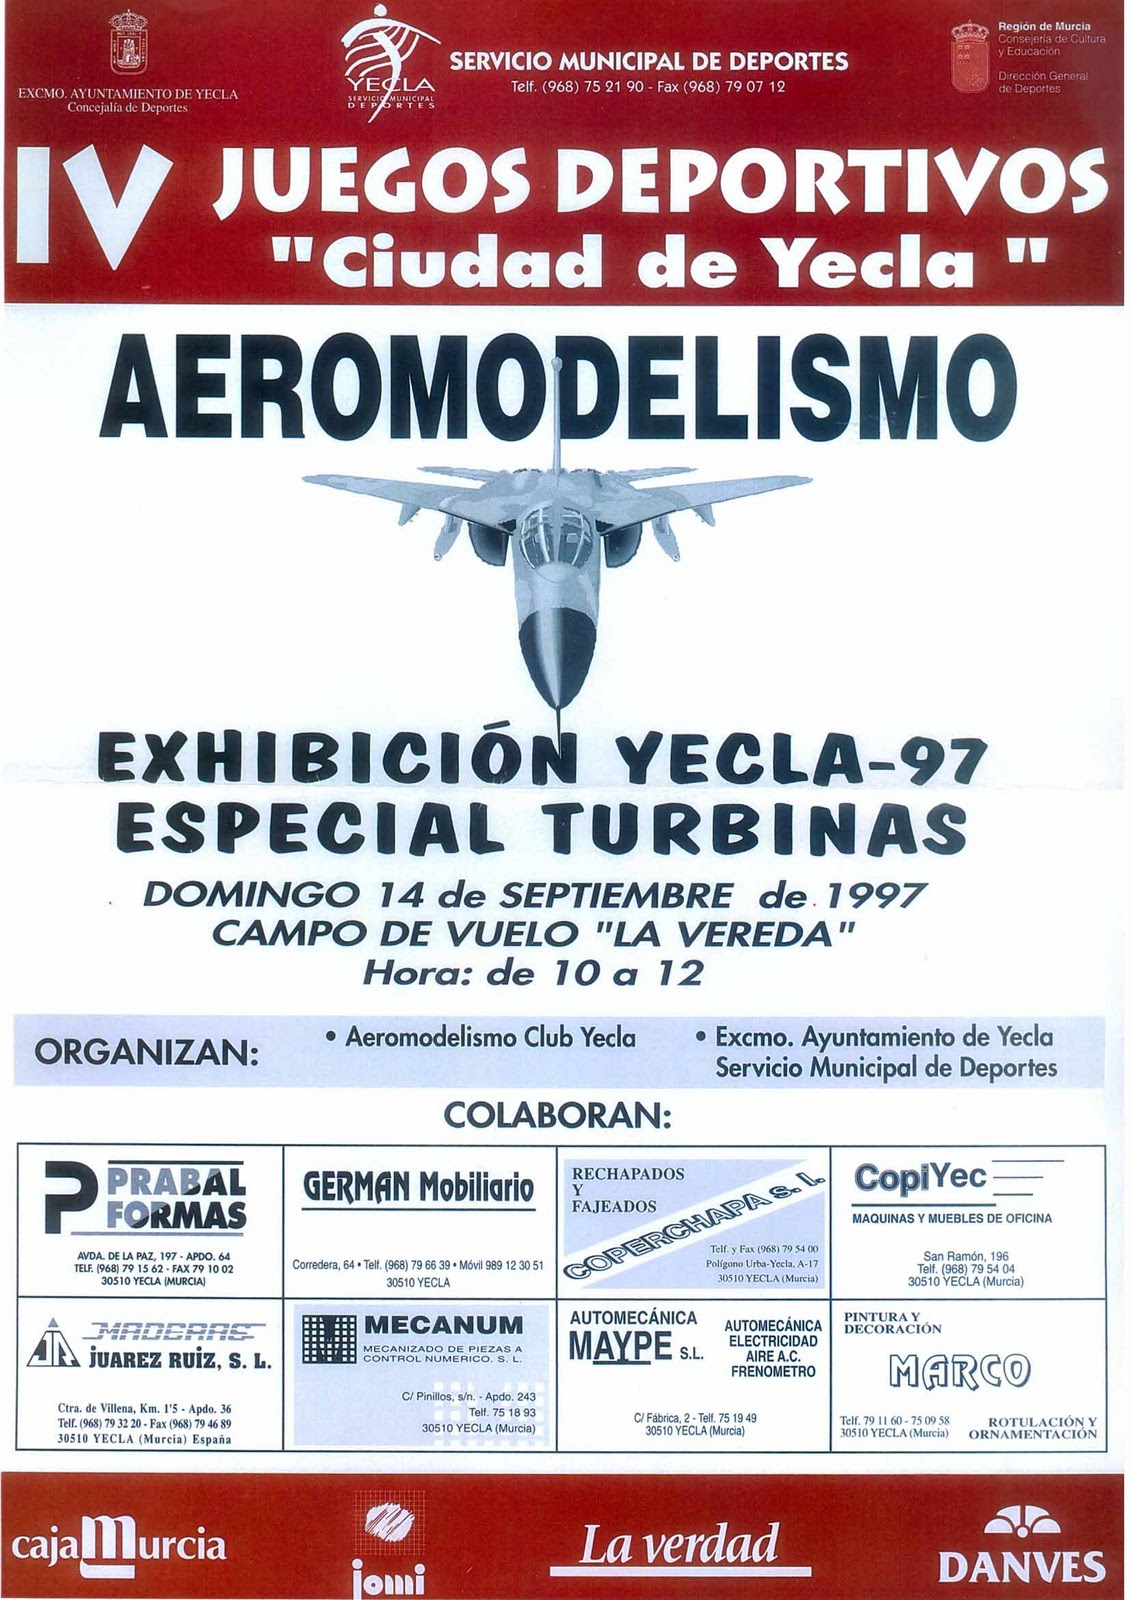 Aeromodelismo Club Yecla: Eventos